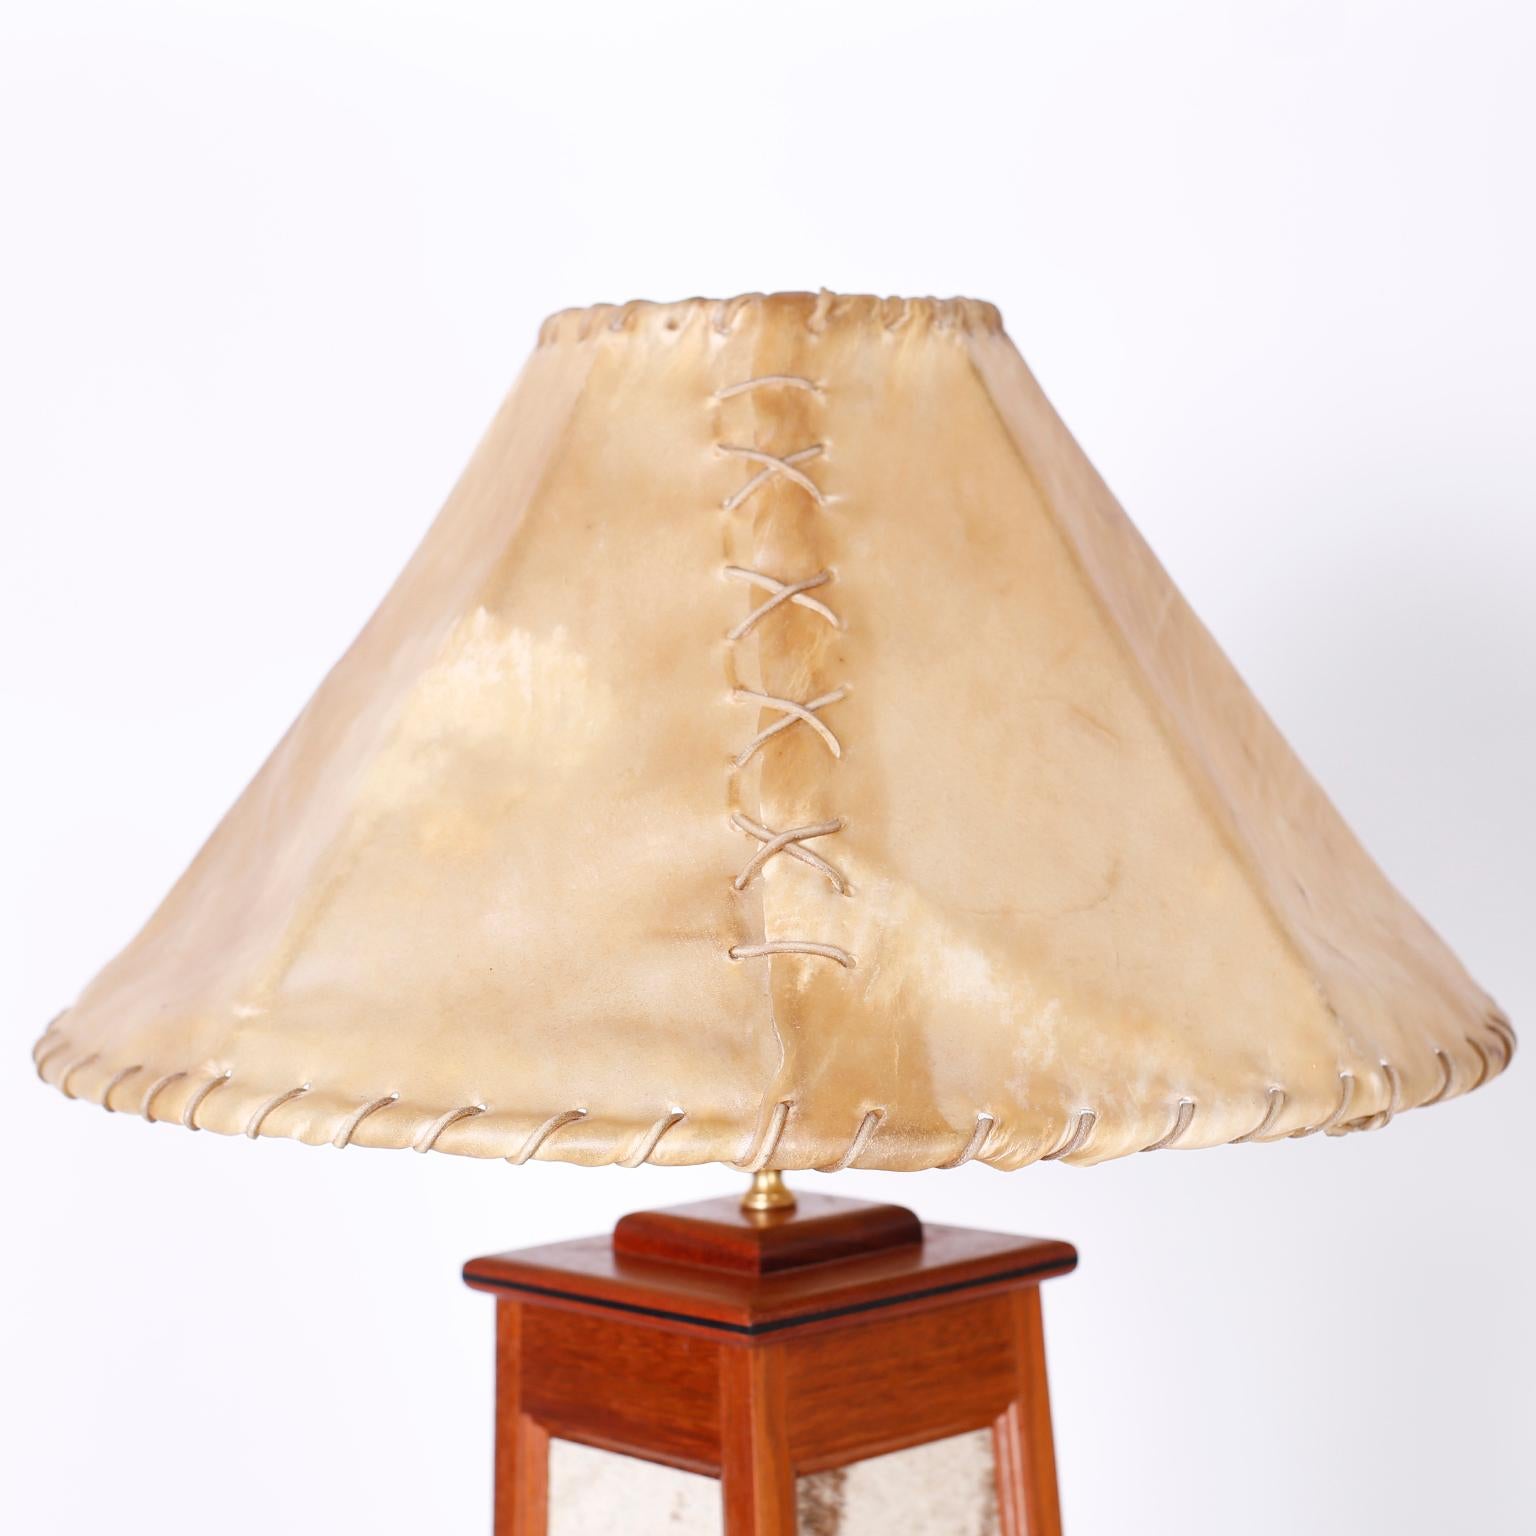 British Colonial Style Floor Lamps, Zebra Skin Floor Lamp